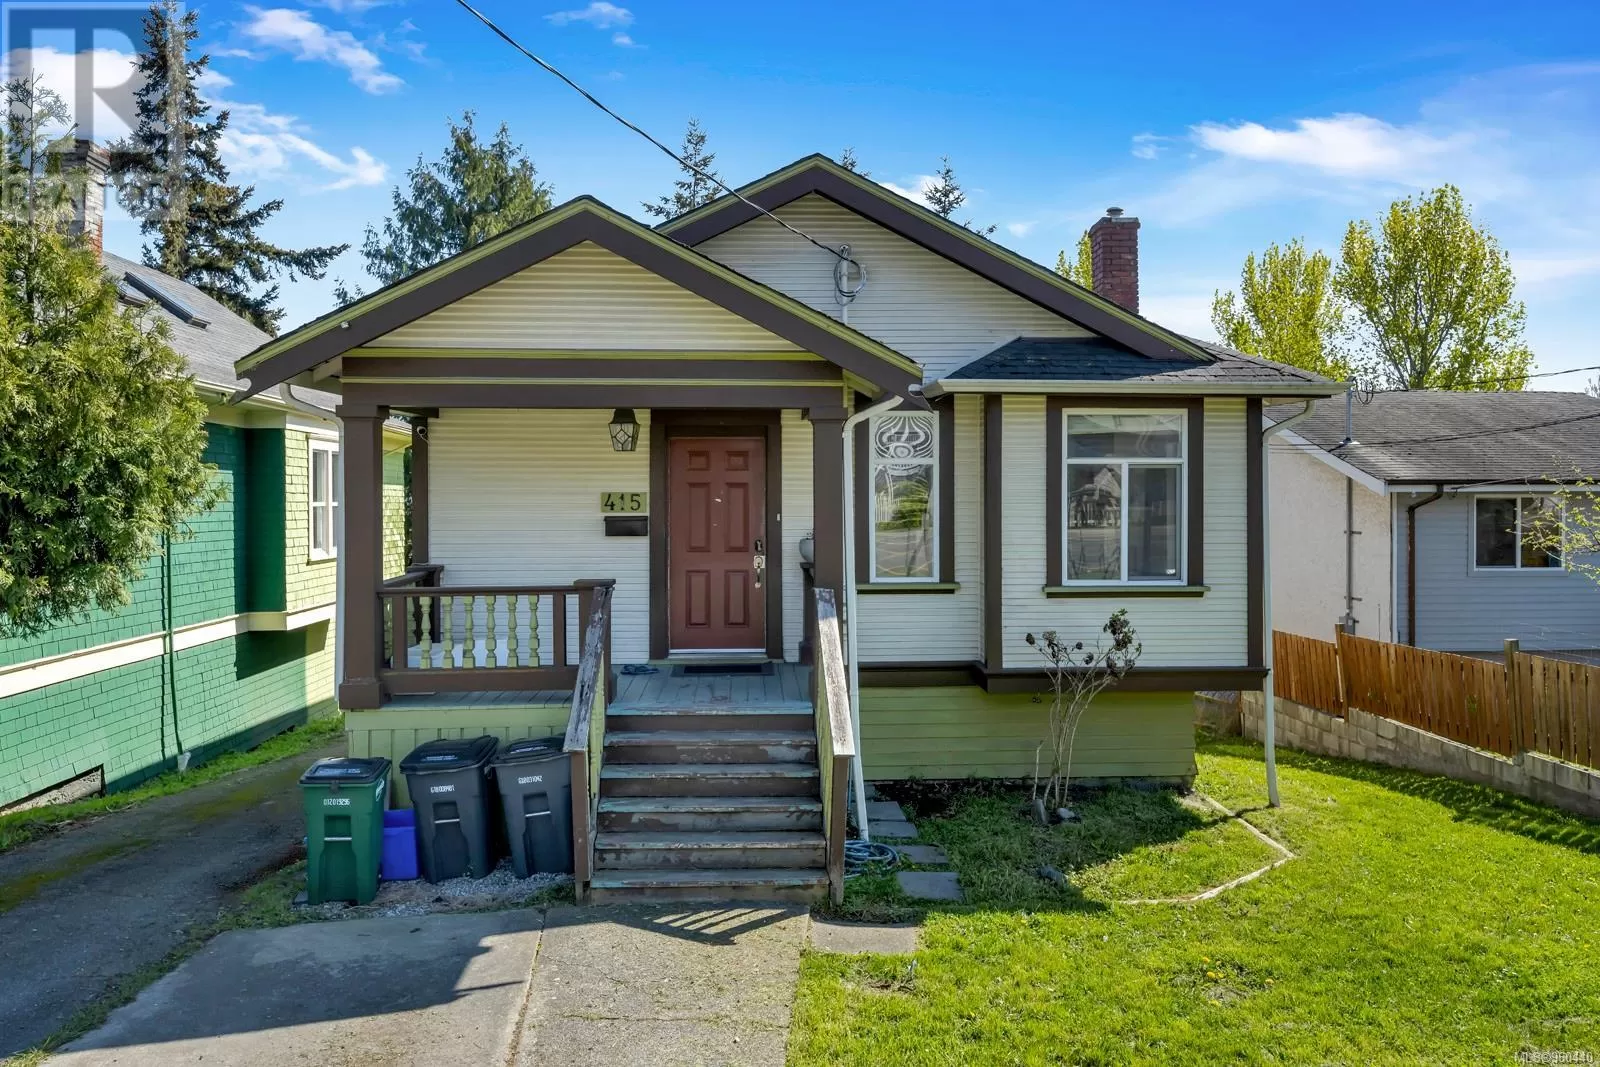 House for rent: 415 Boleskine Rd, Saanich, British Columbia V8Z 1E5